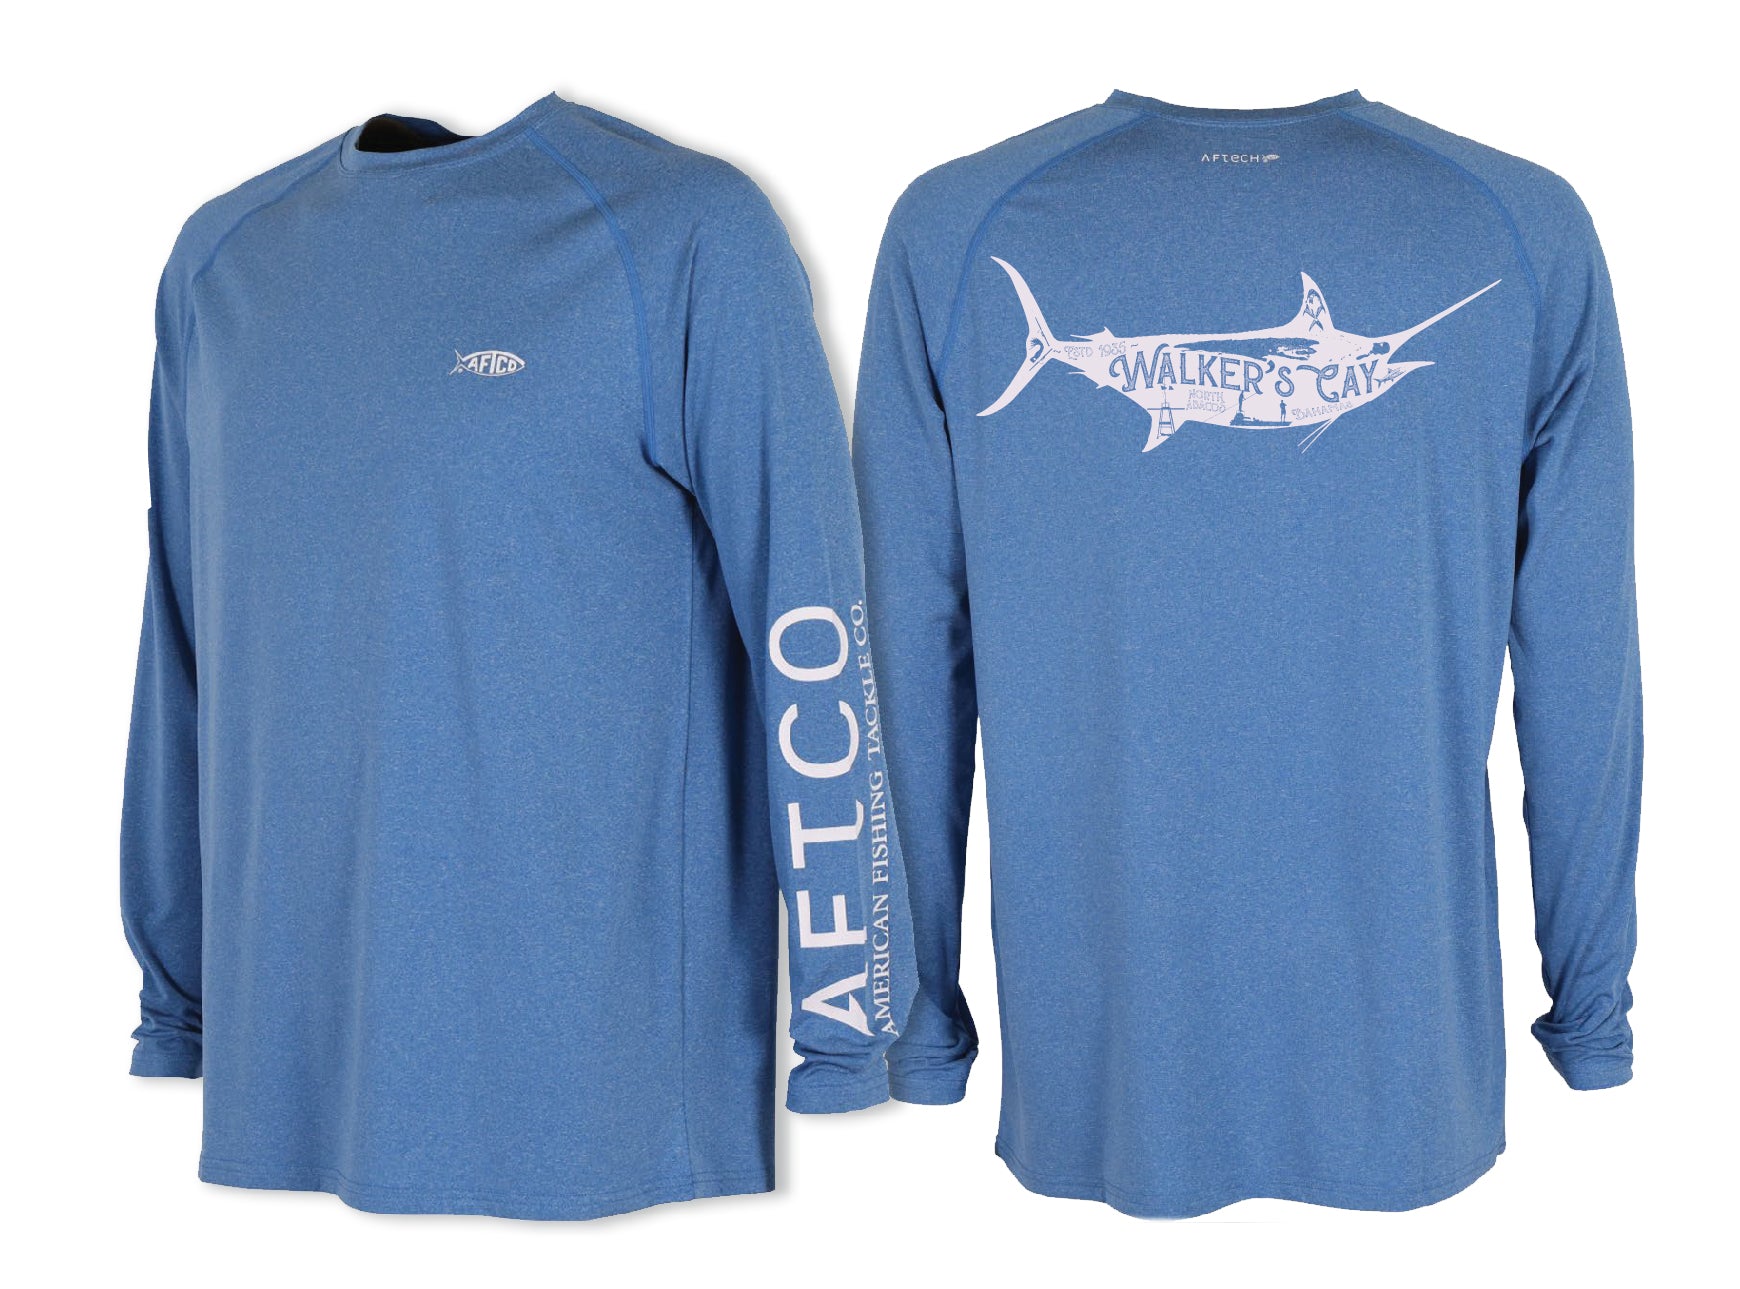 Iconic Marlin - Men's AFTCO Samurai LS Sun Protection Shirt – Shop